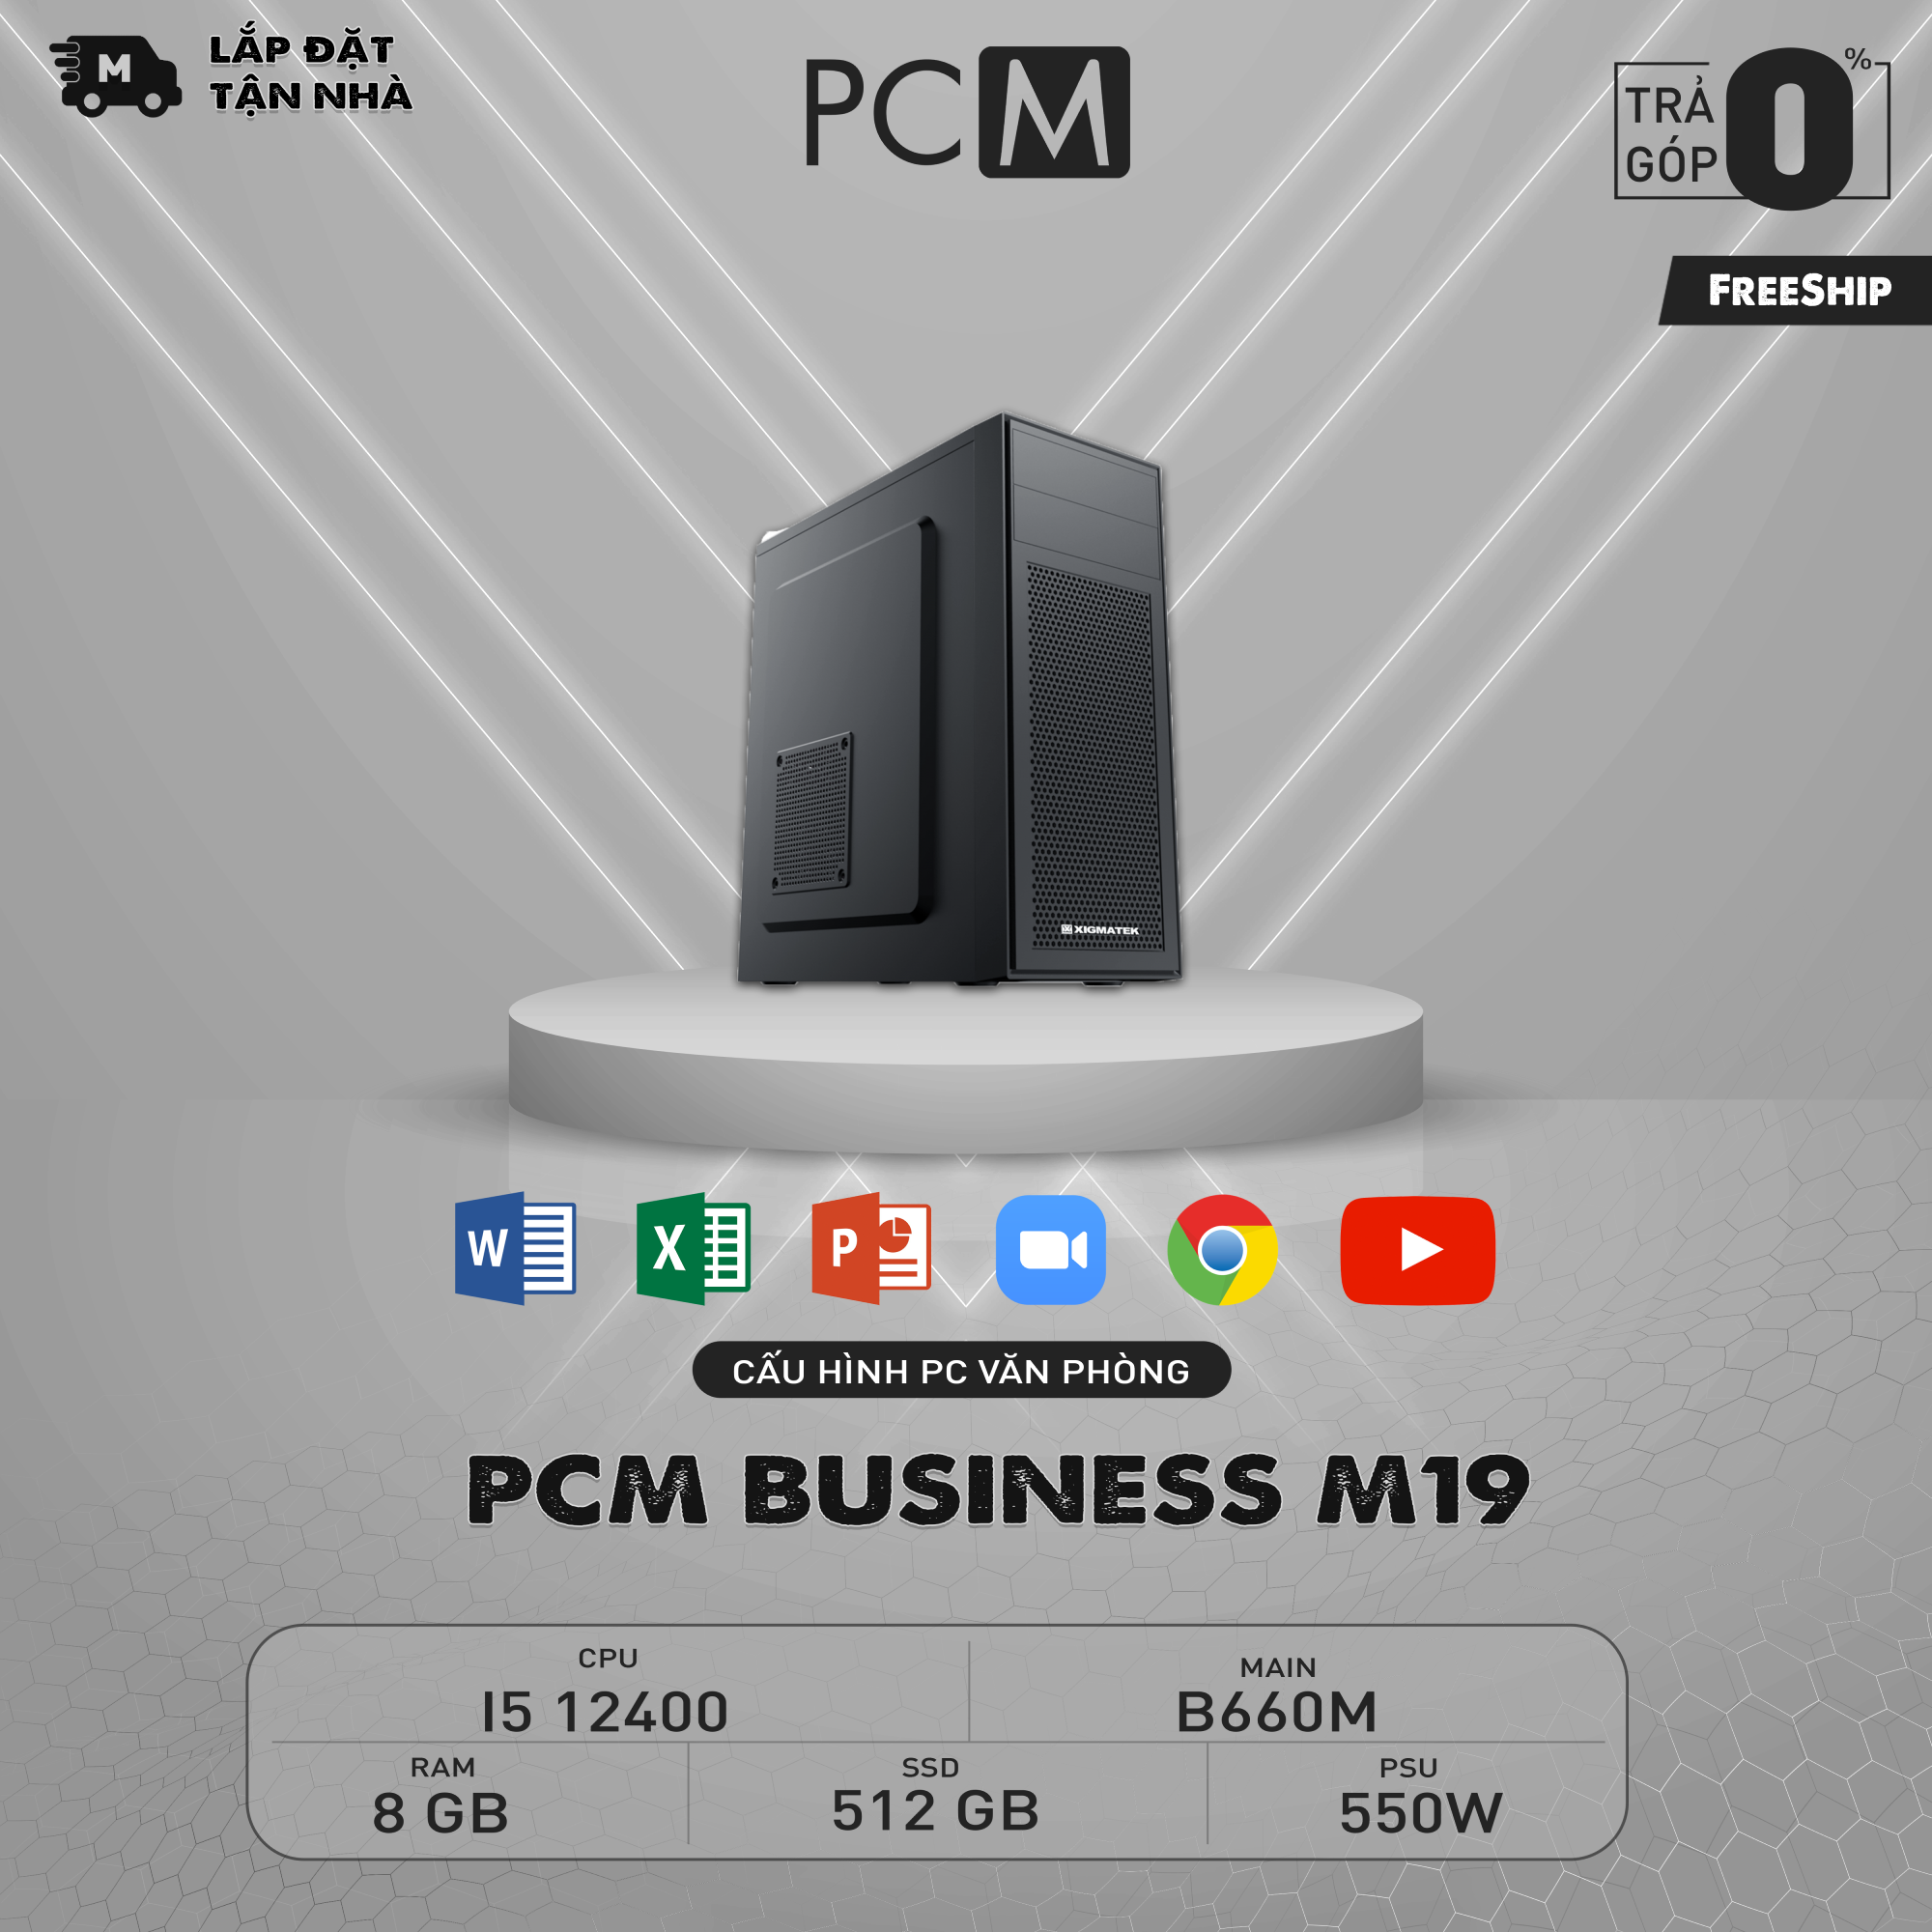 PCM BUSINESS M19 (I5 12400/8GB RAM/512GB SSD)